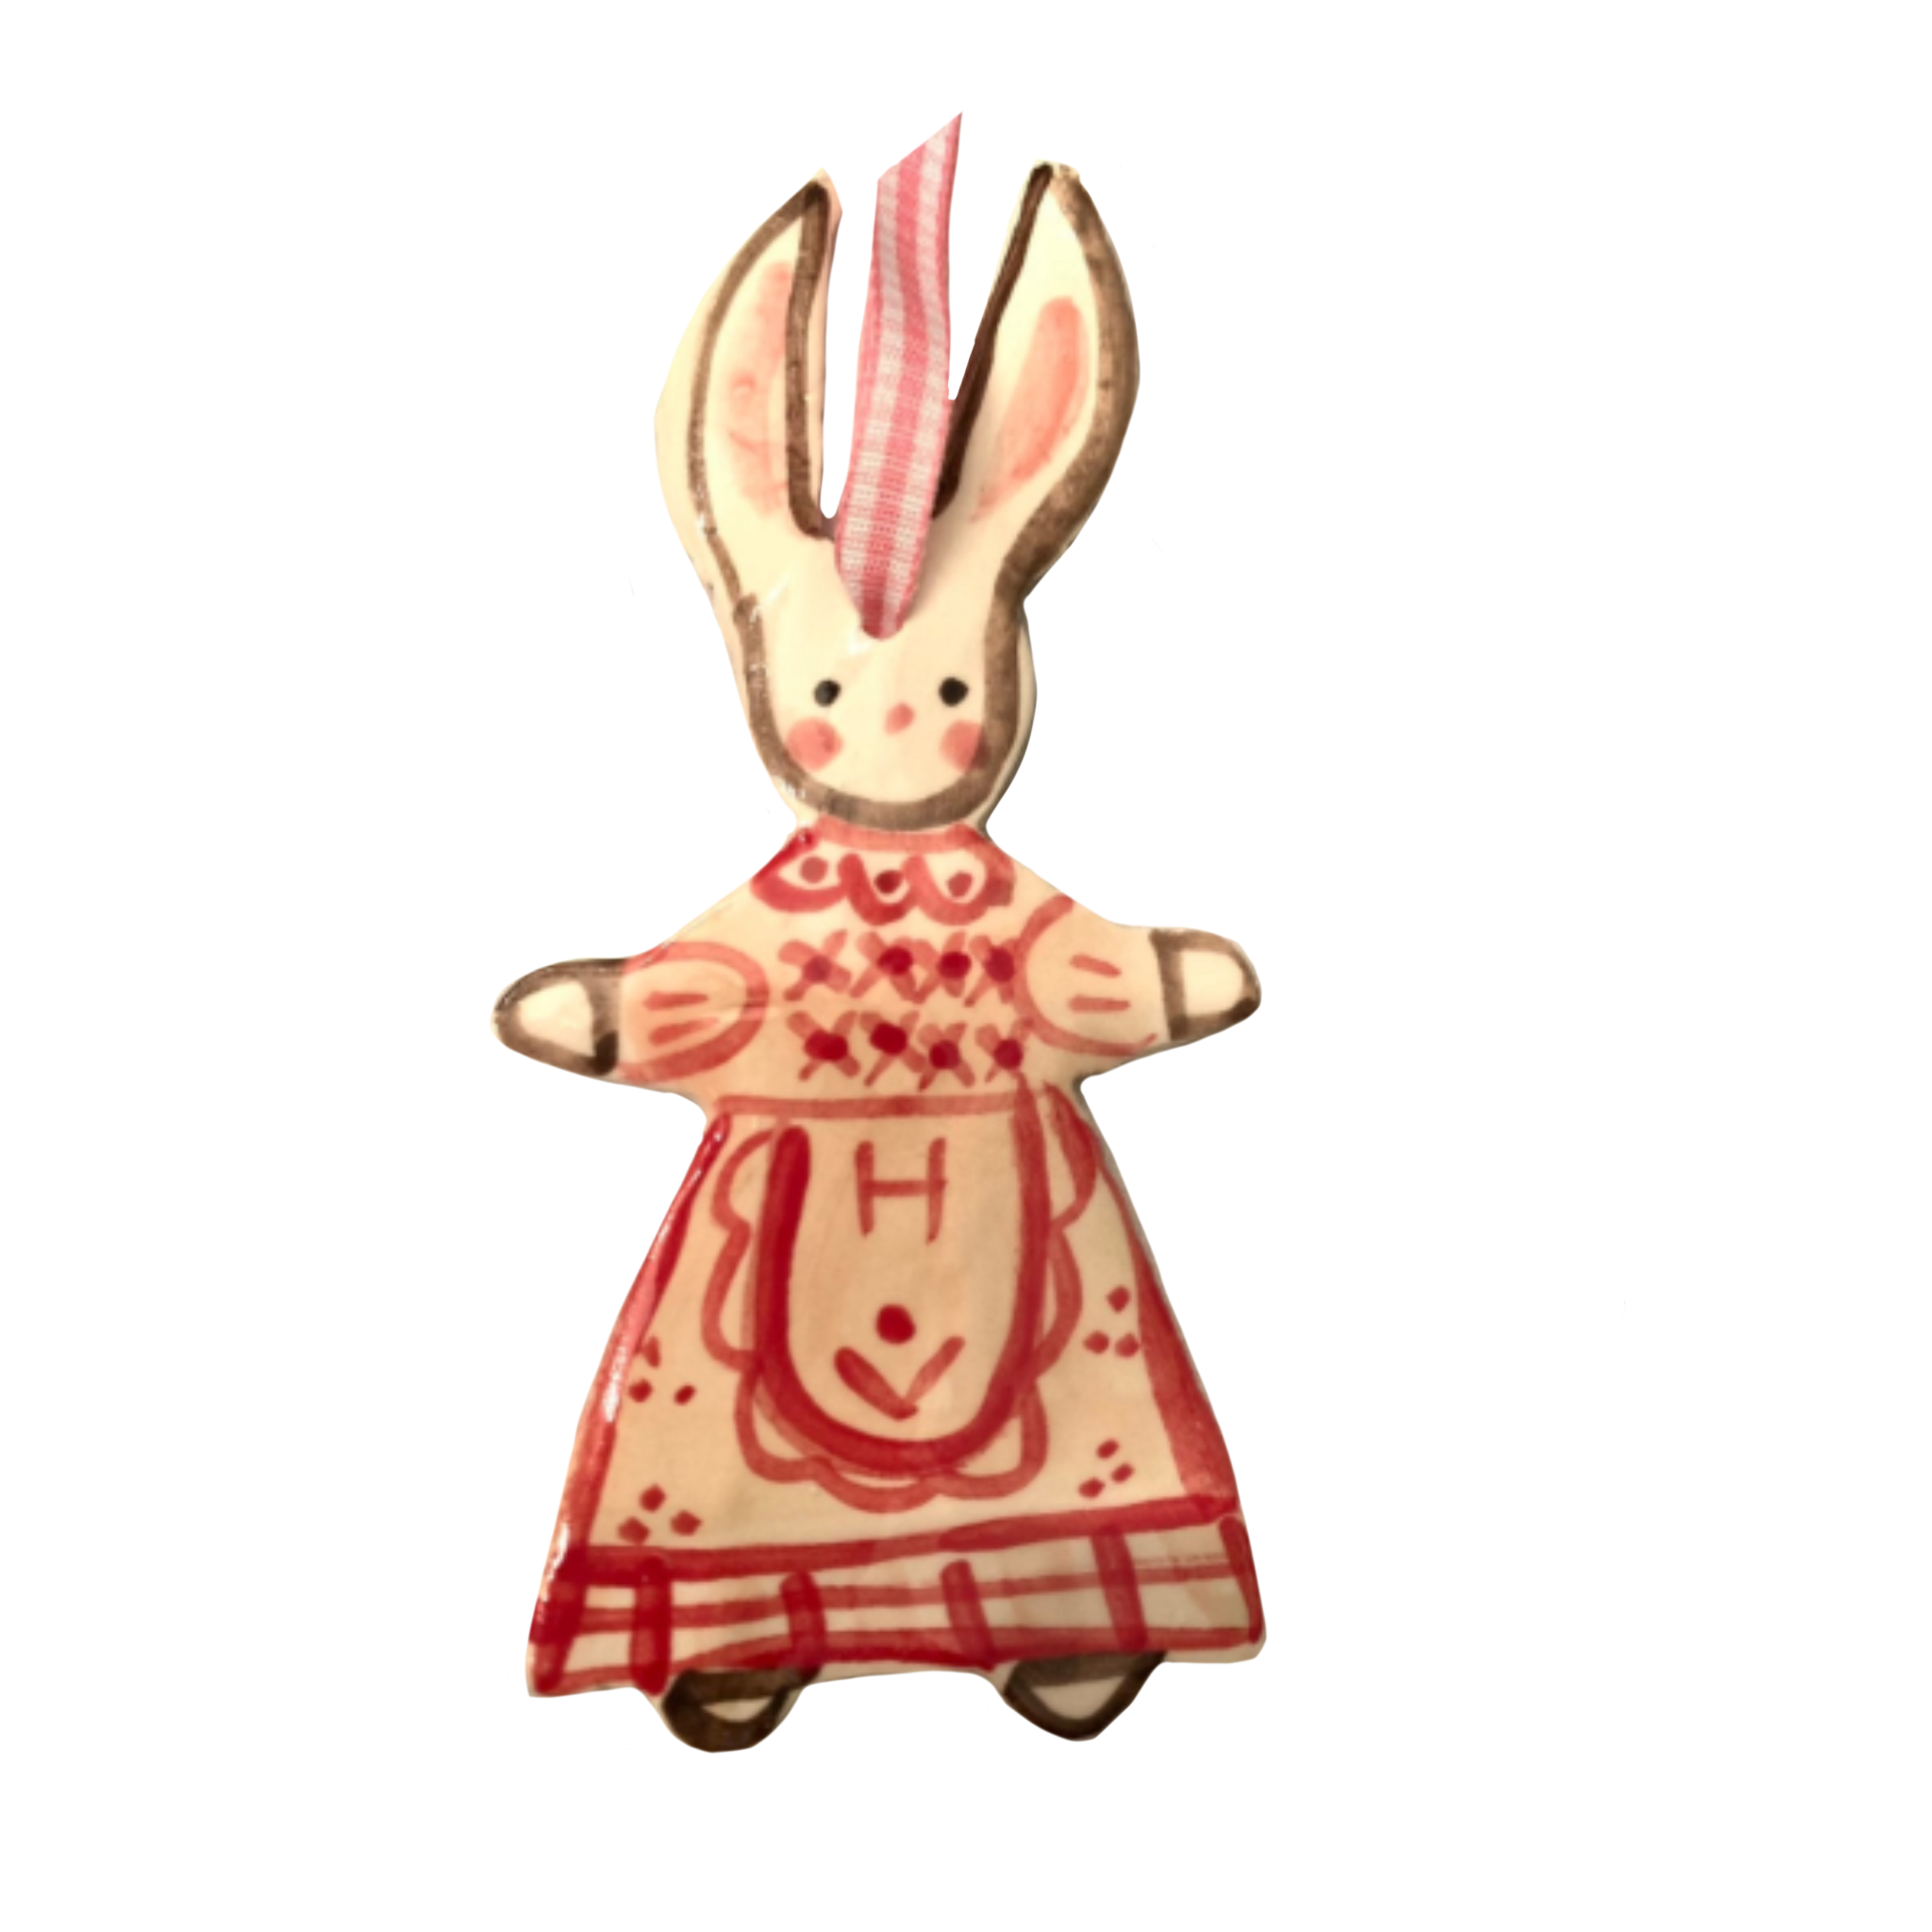 Bunny Girl Ornament - Tricia Lowenfield Design